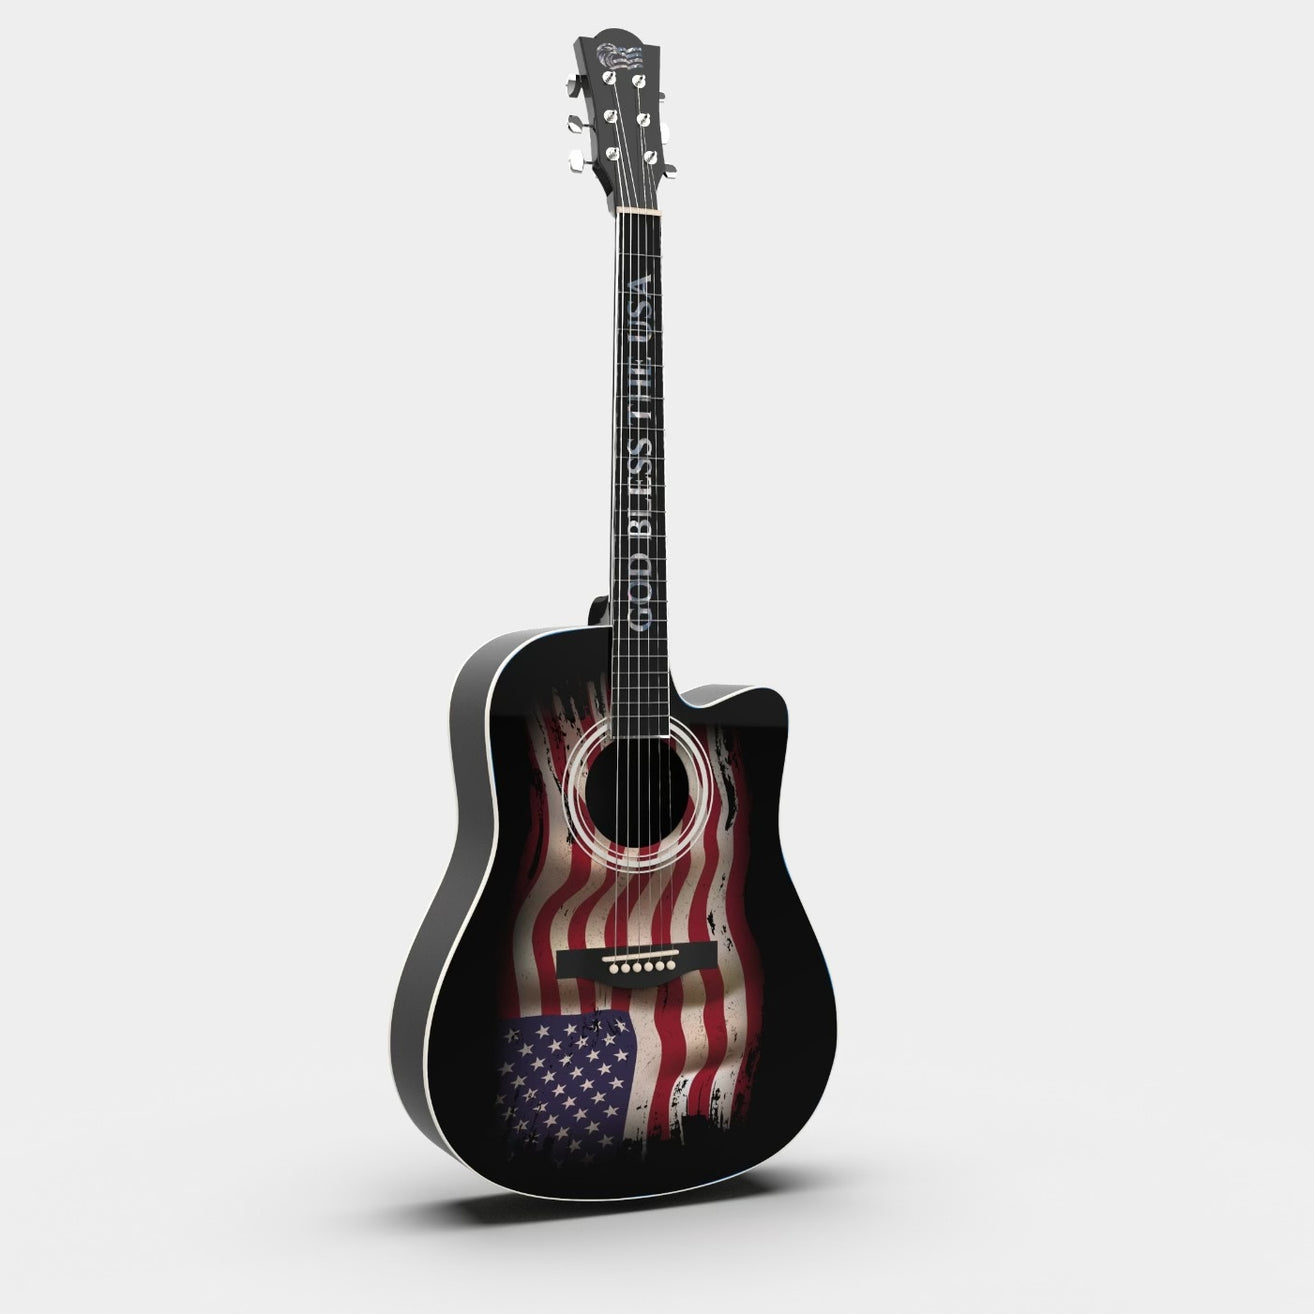 God Bless The USA Flag Guitar